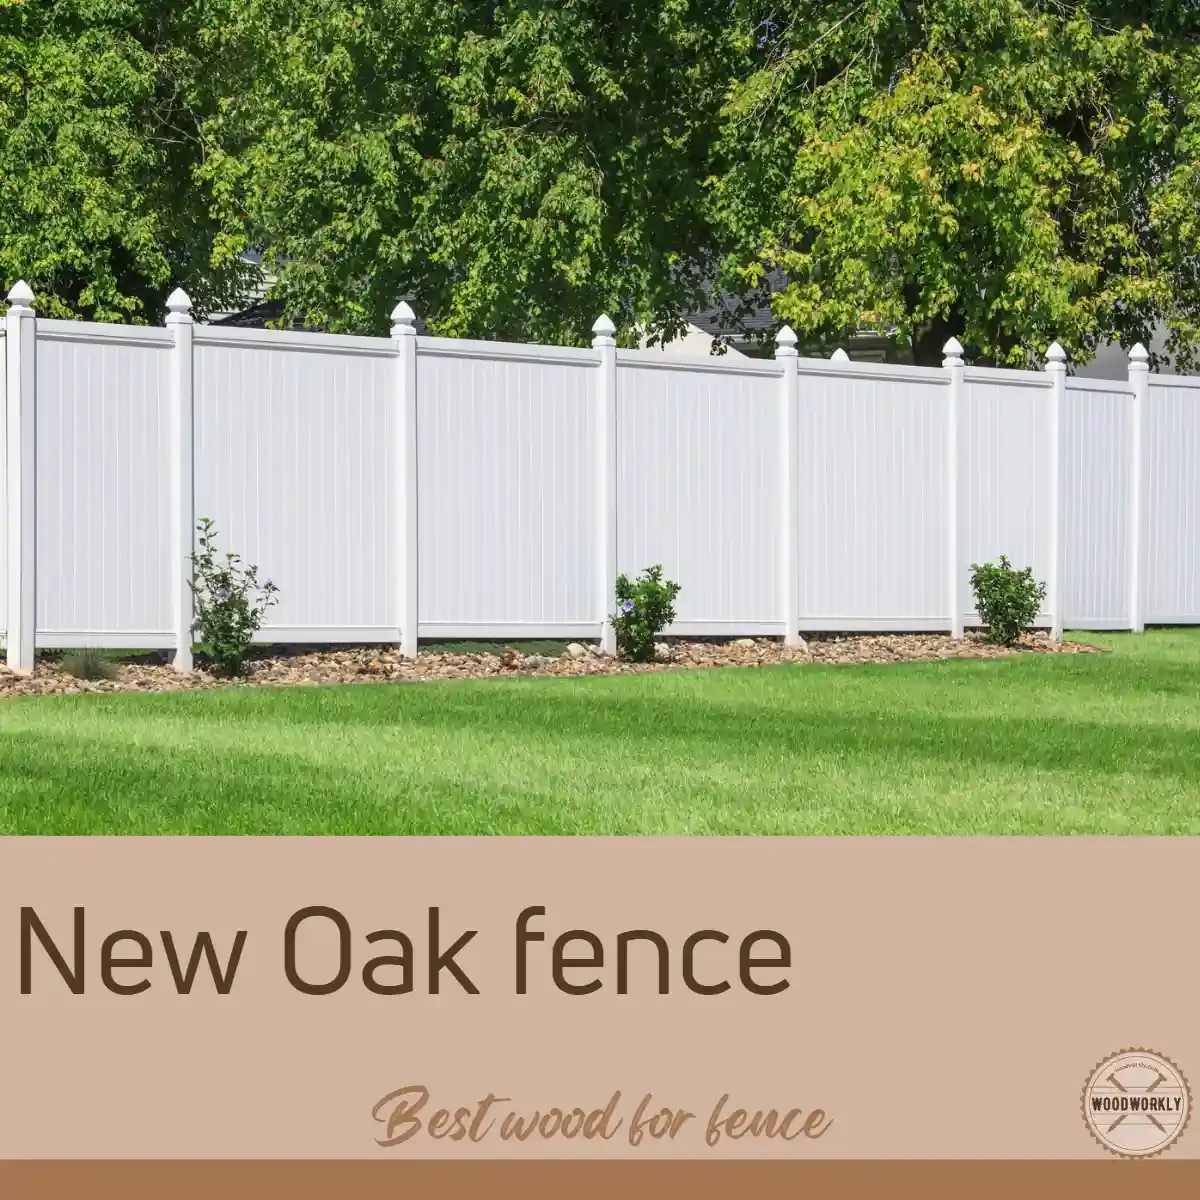 New Oak fence